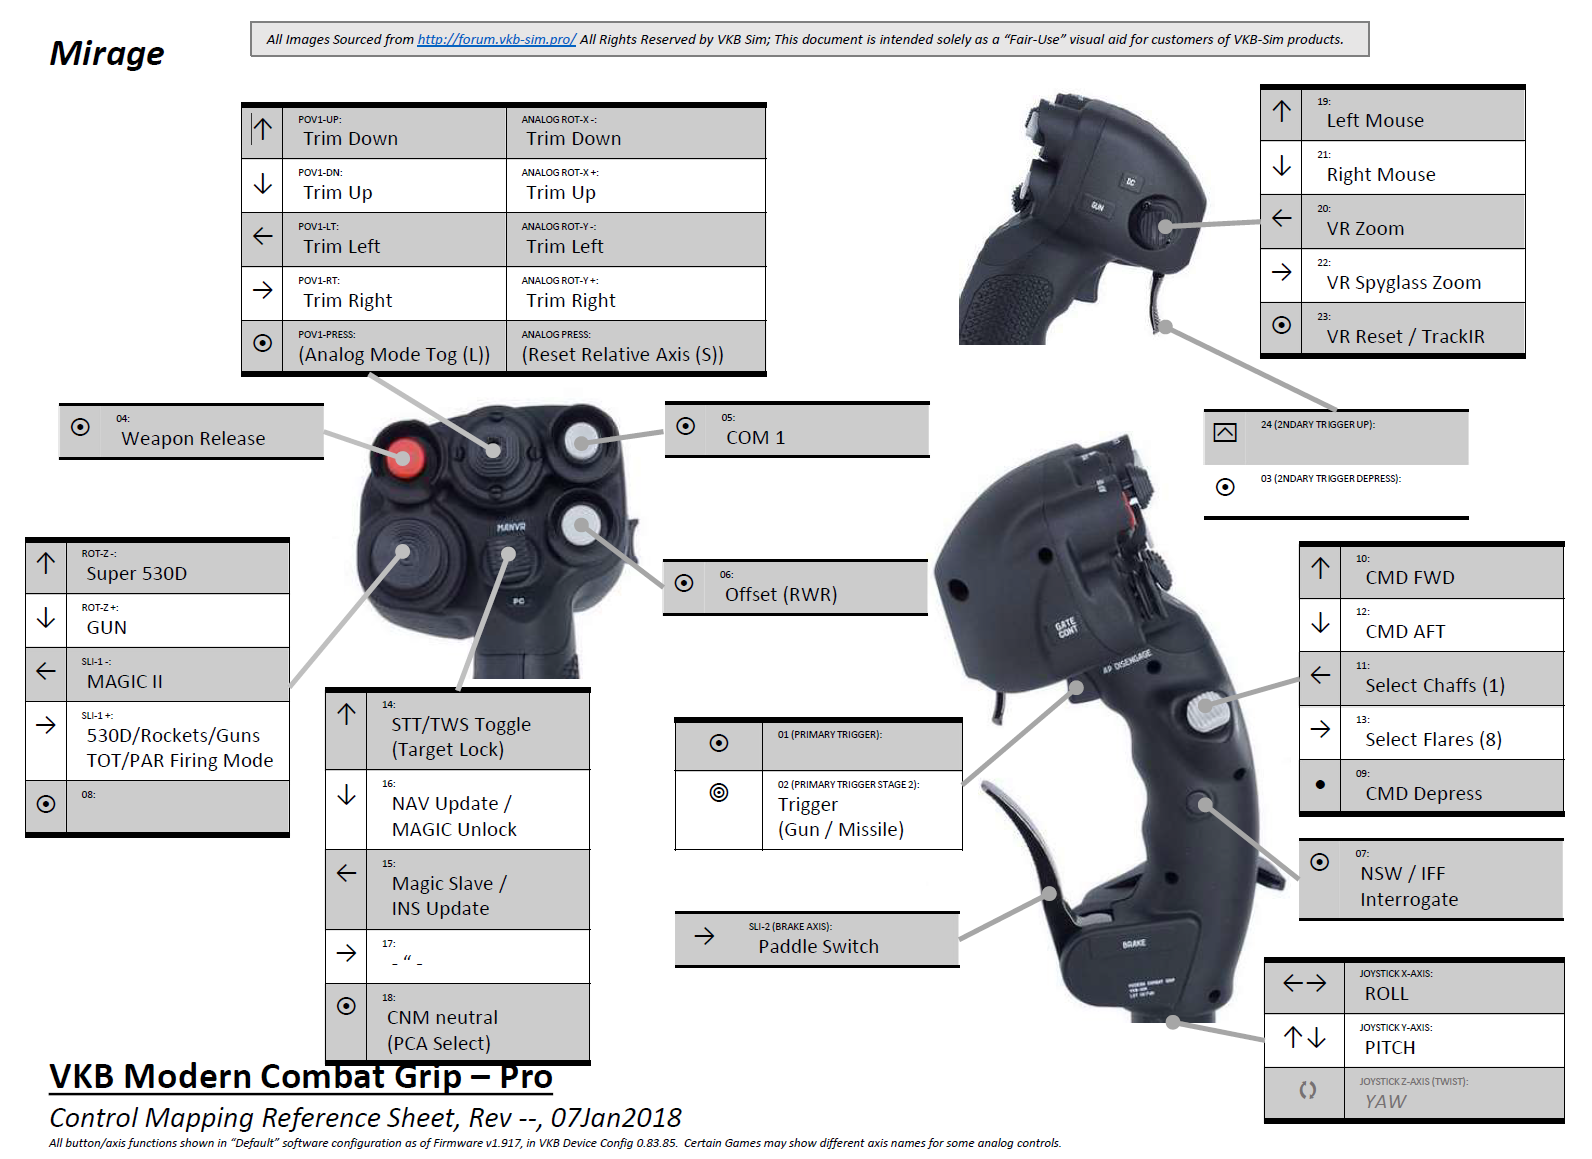 Profile VKB Modern Combat Grip Pro (MCG Pro) & Warthog Throttle for M-2000C